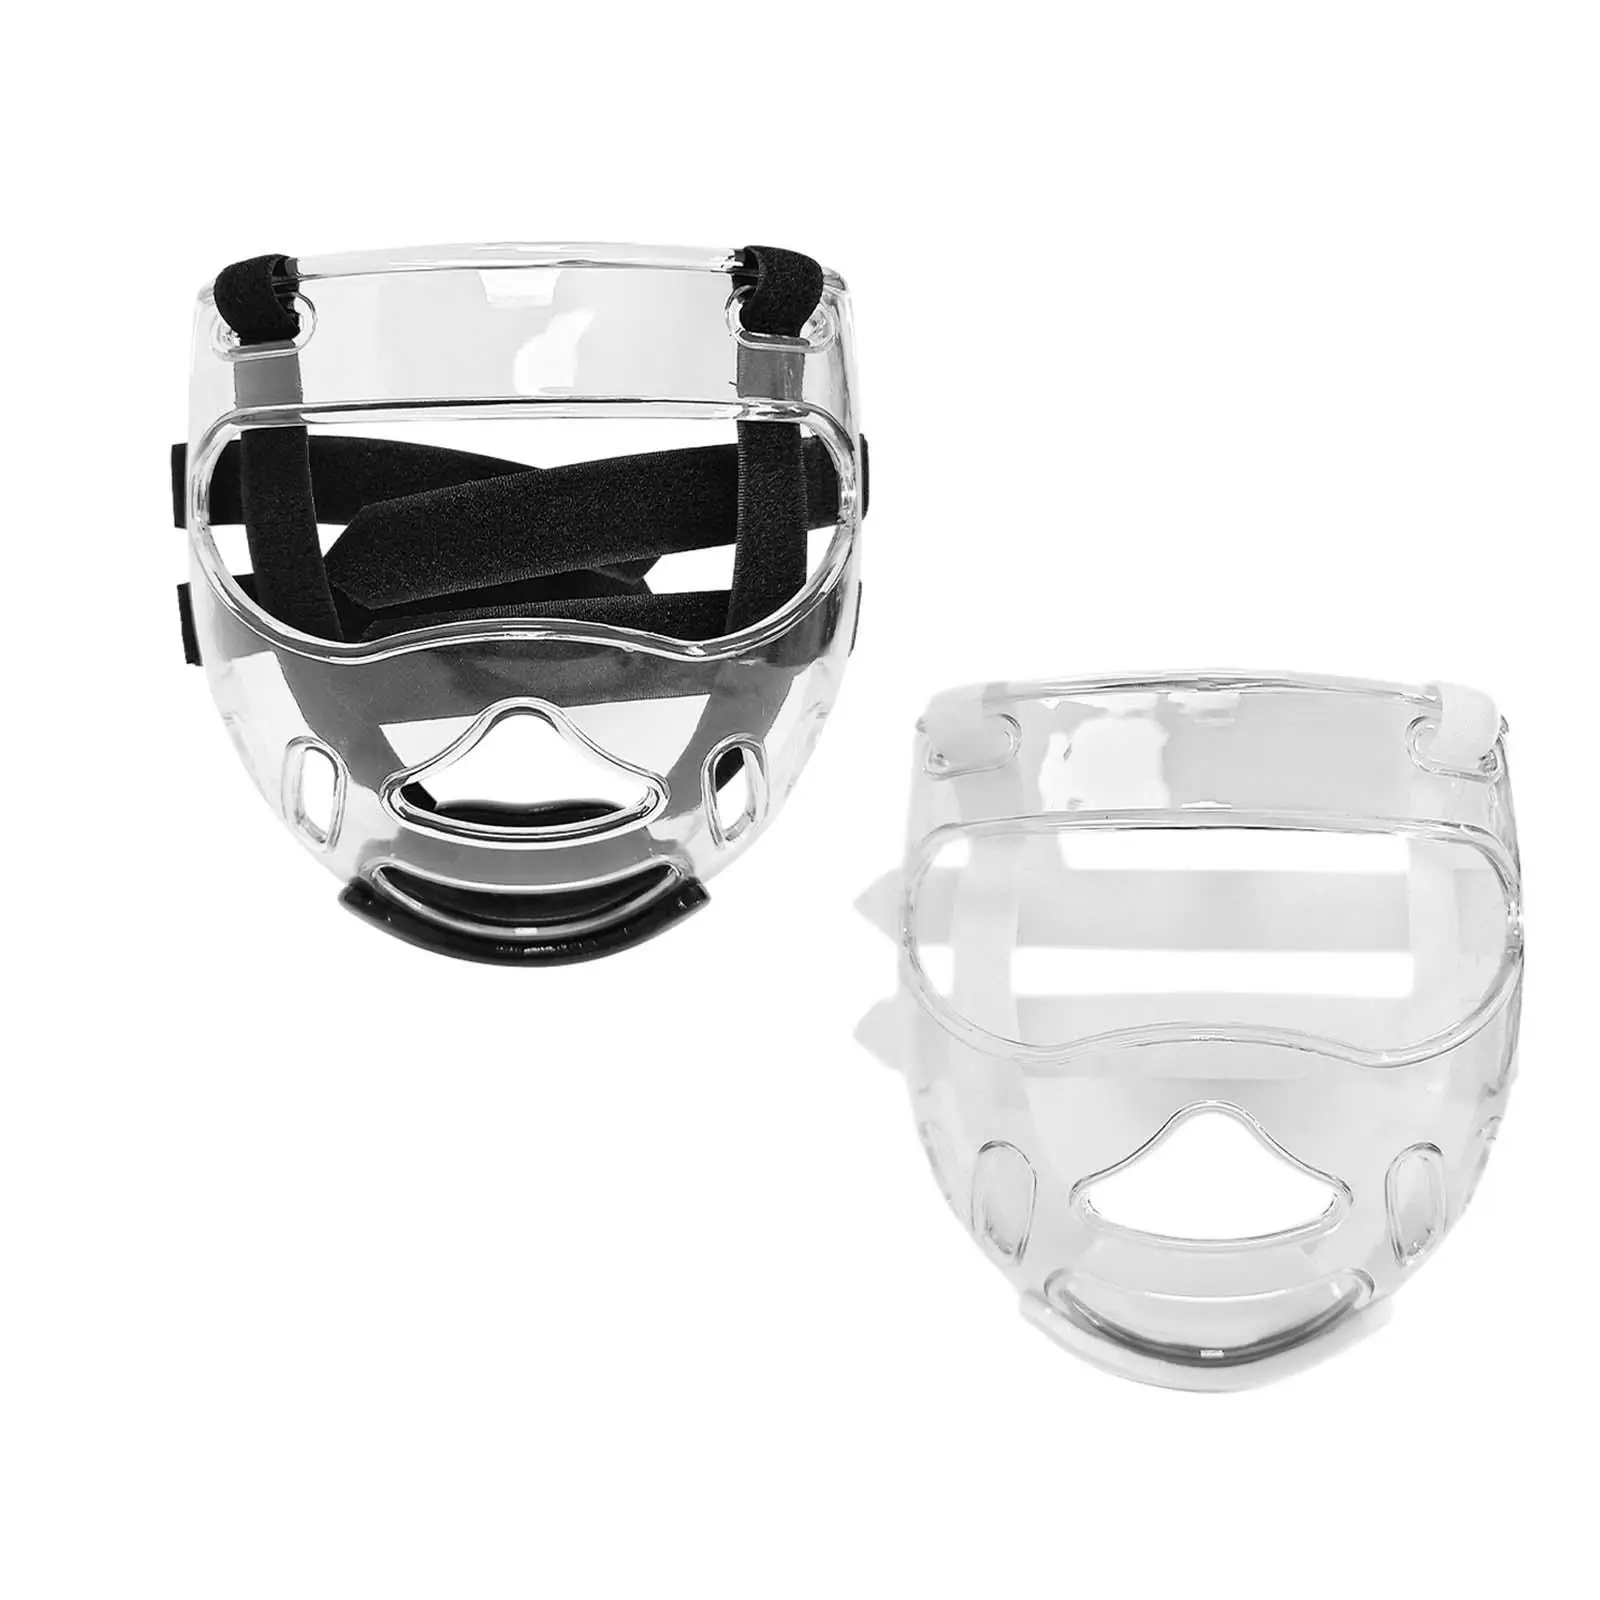 Taekwondo Face Mask Taekwondo Face Shield Portable Protective Mask Transparent Face Guard for Sanda Sports Fighting Boxin Karate